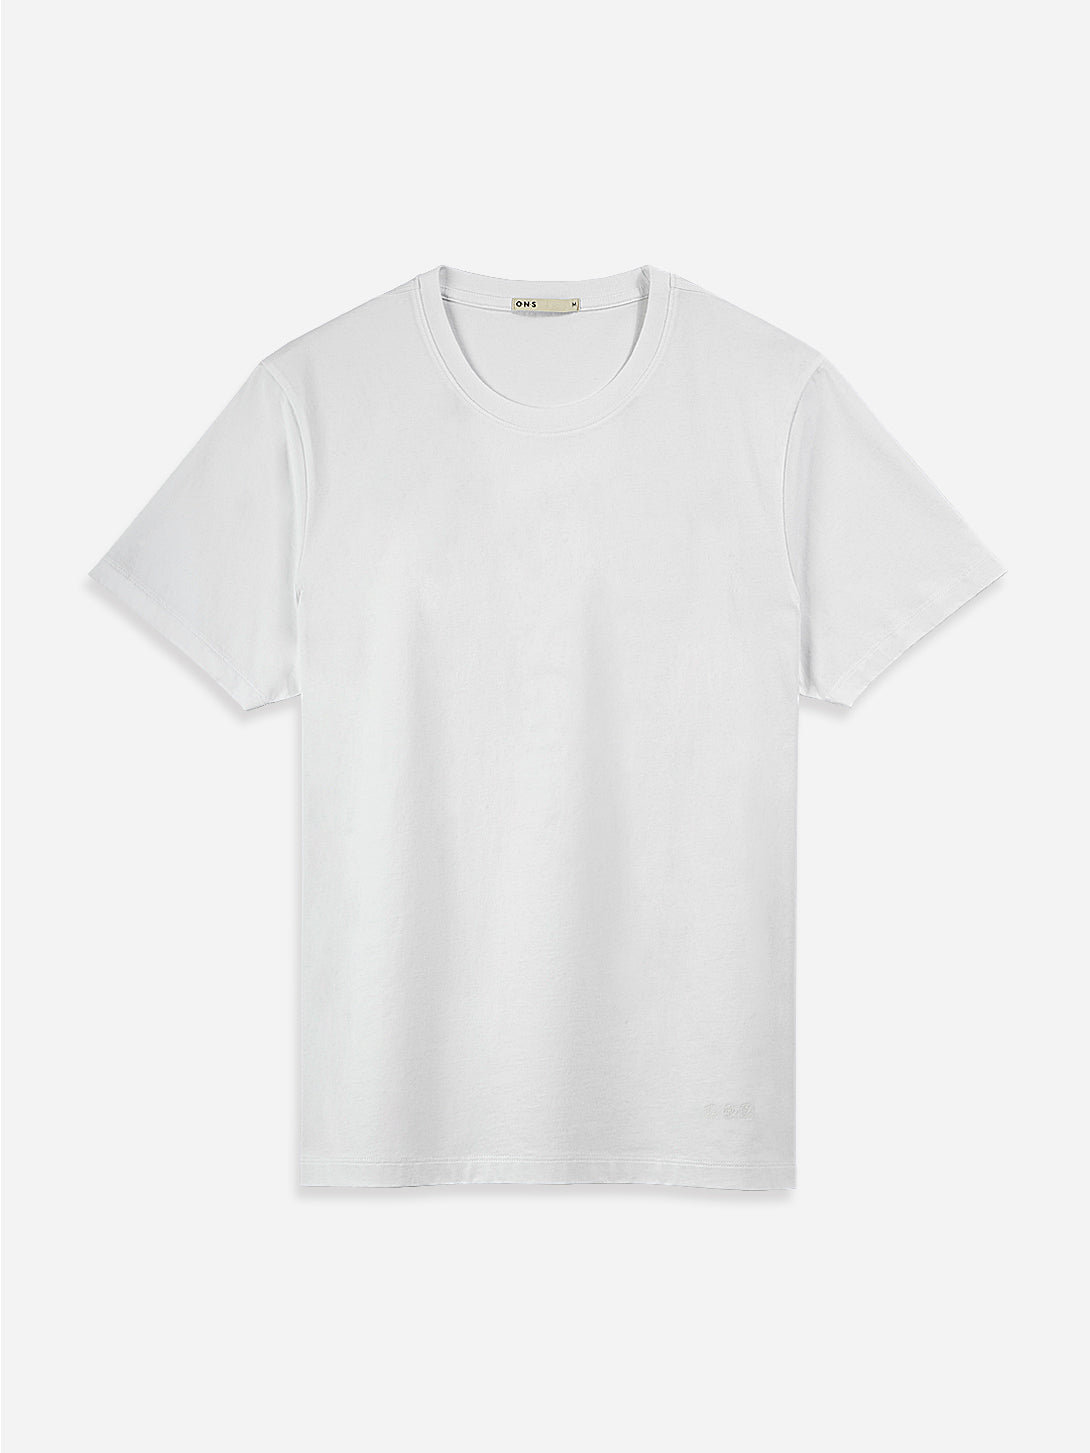 BRIGHT WHITE Village Crew Neck Tee Mens Basic Neutral Logo Short Sleeve Shirts